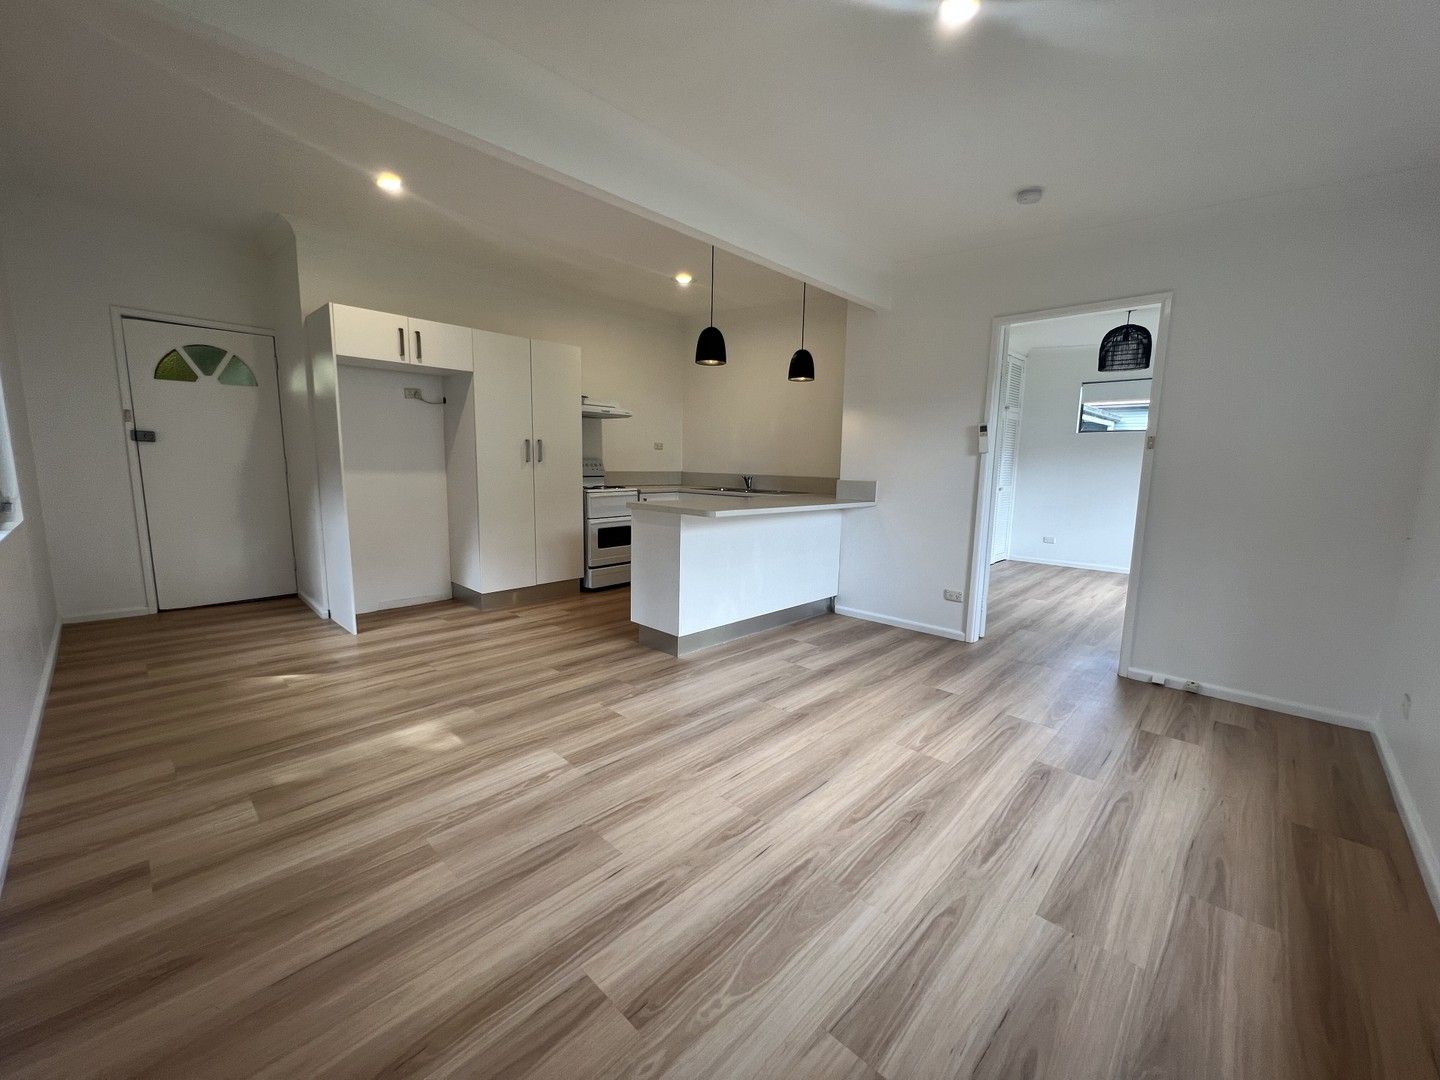 1 bedrooms House in FLAT 59 Park Avenue ADAMSTOWN NSW, 2289